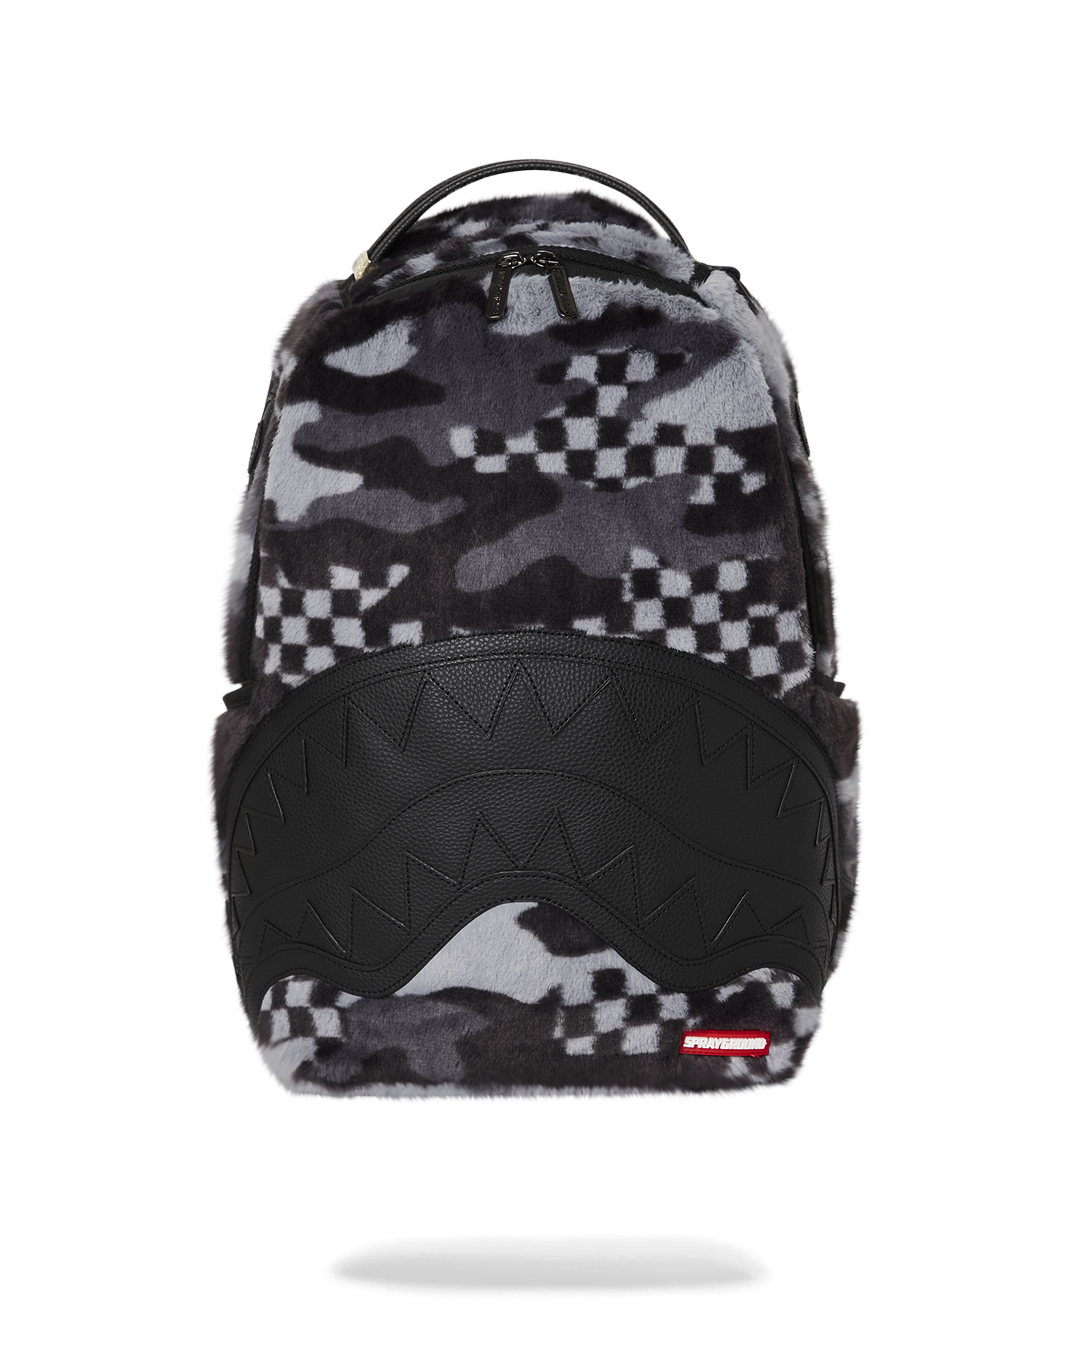 Sprayground 3AM Black Camo Teddy Bear Backpack Limited Edition